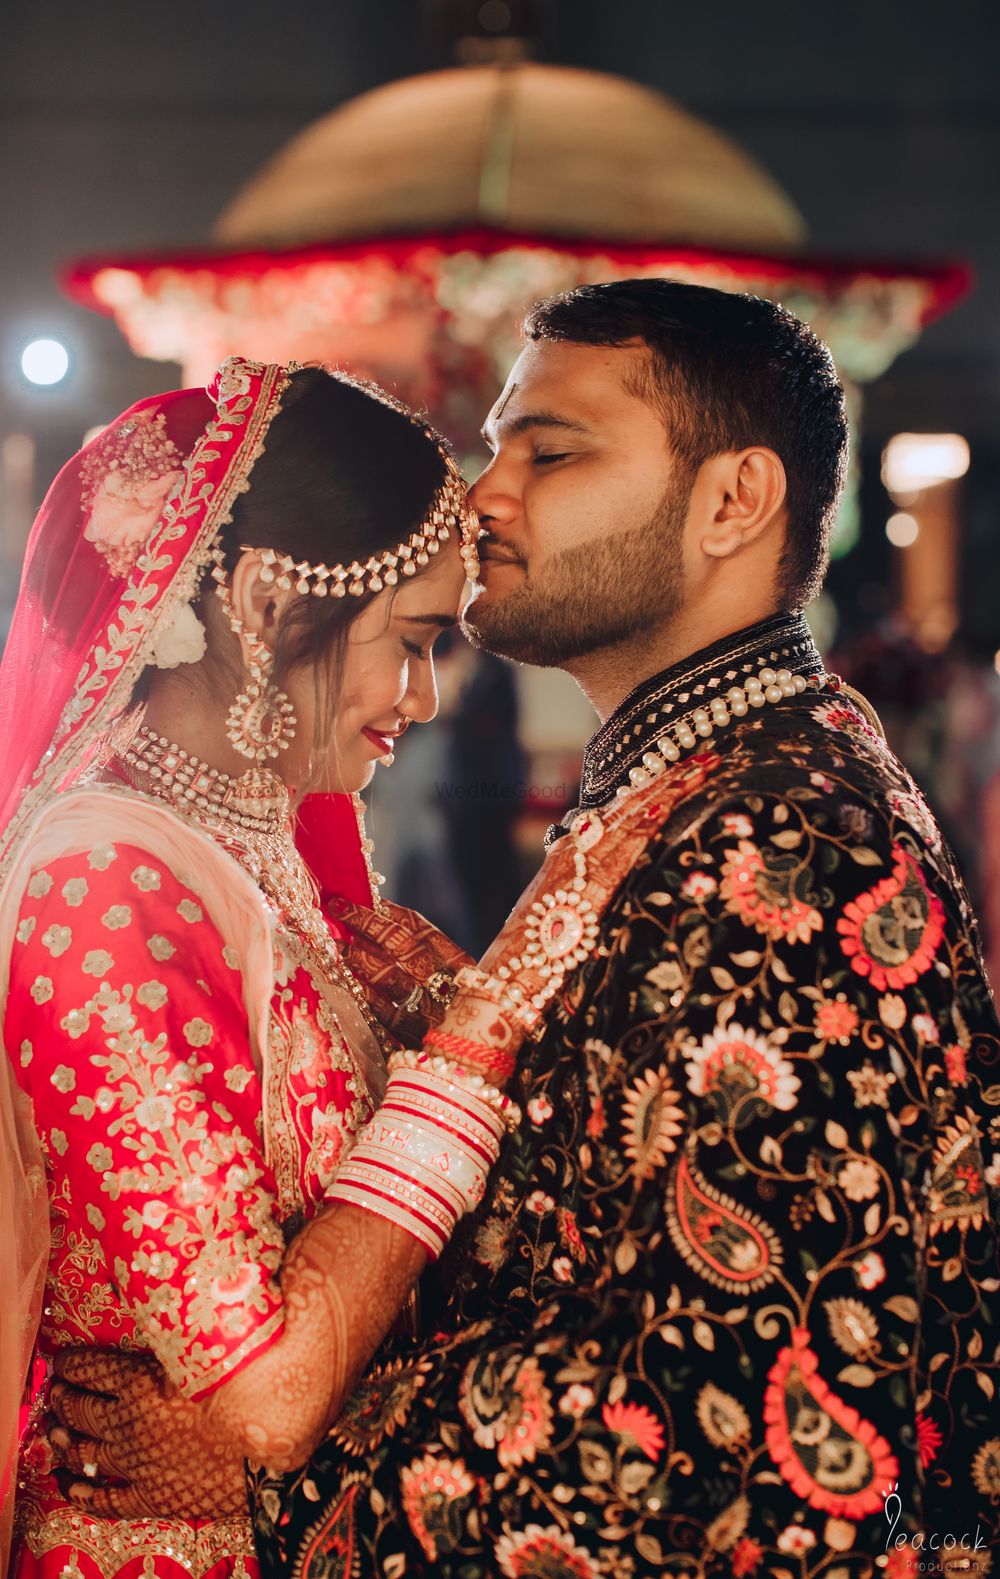 Photo From The wedding of Hardik & Shivangi - By Peacock Productionz